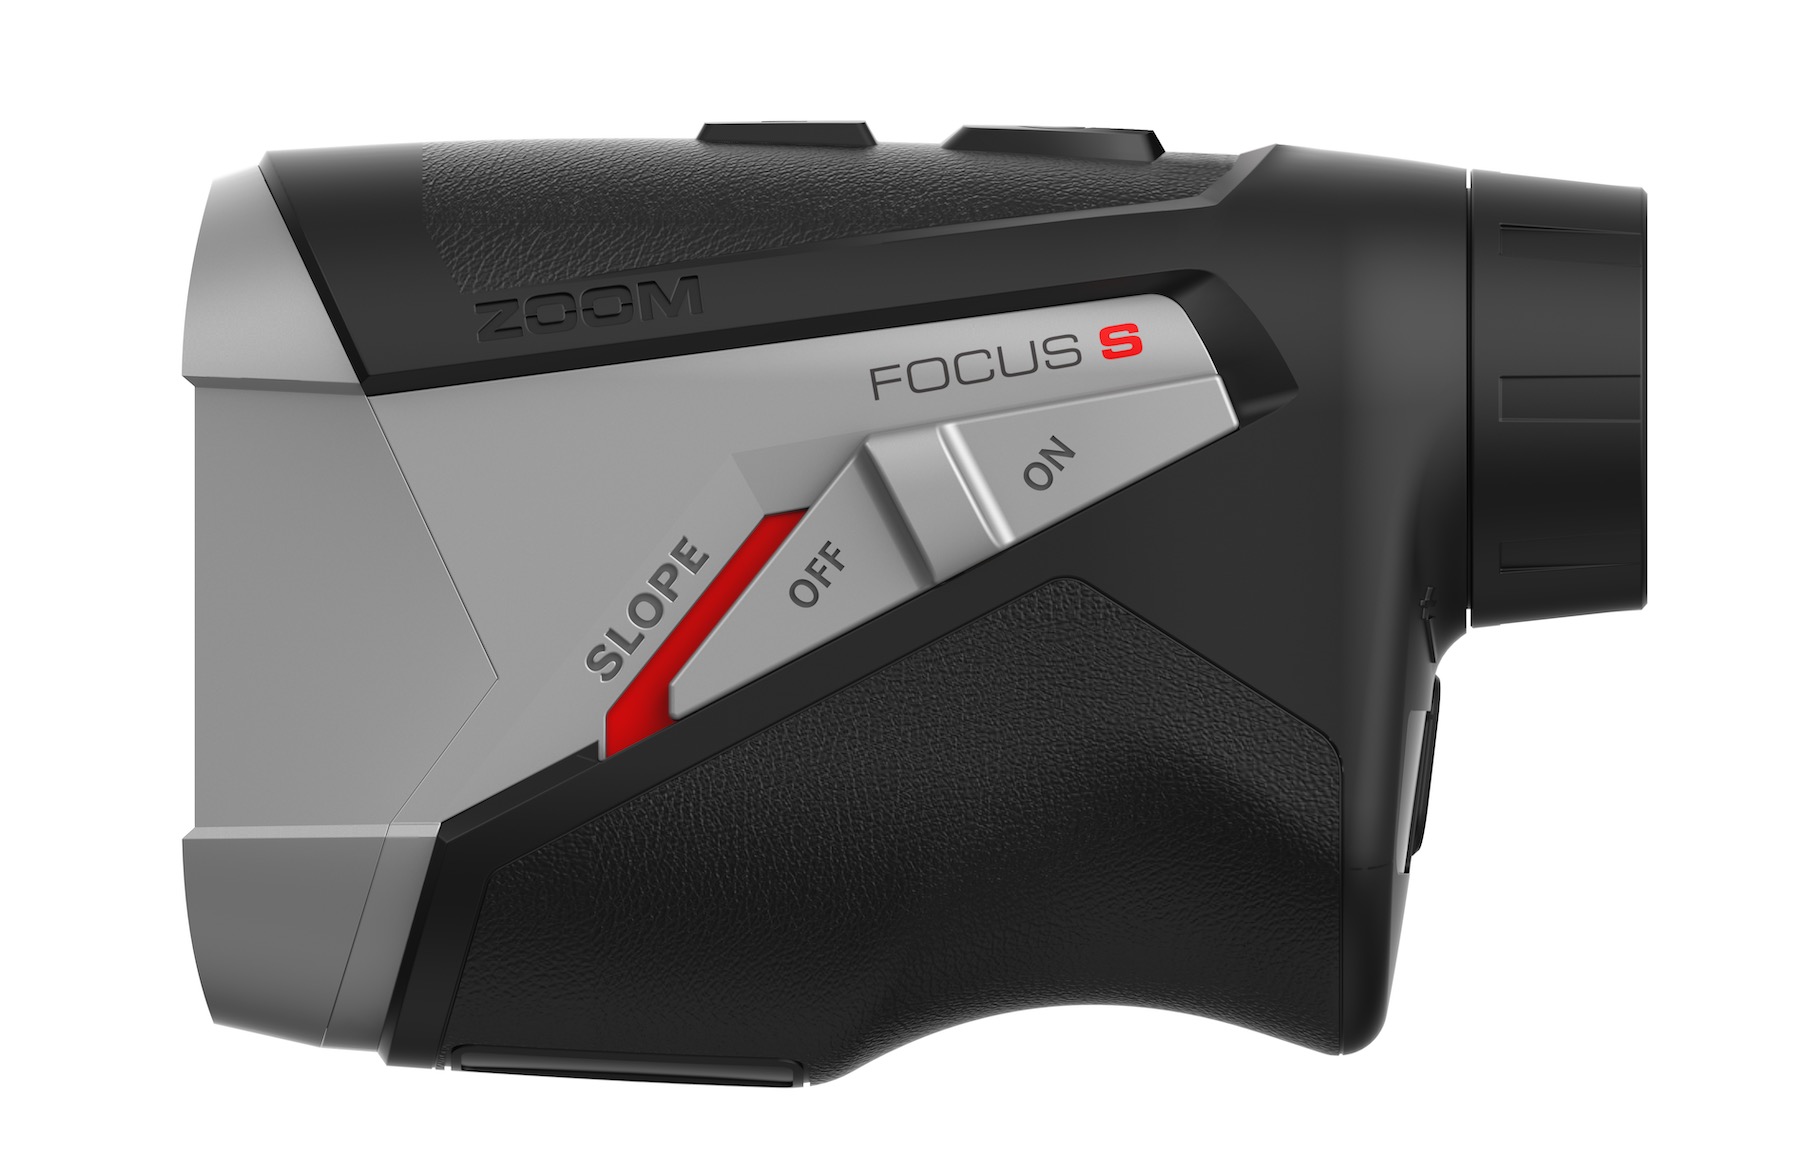 Zoom Rangefinder Focus S Black-Silver